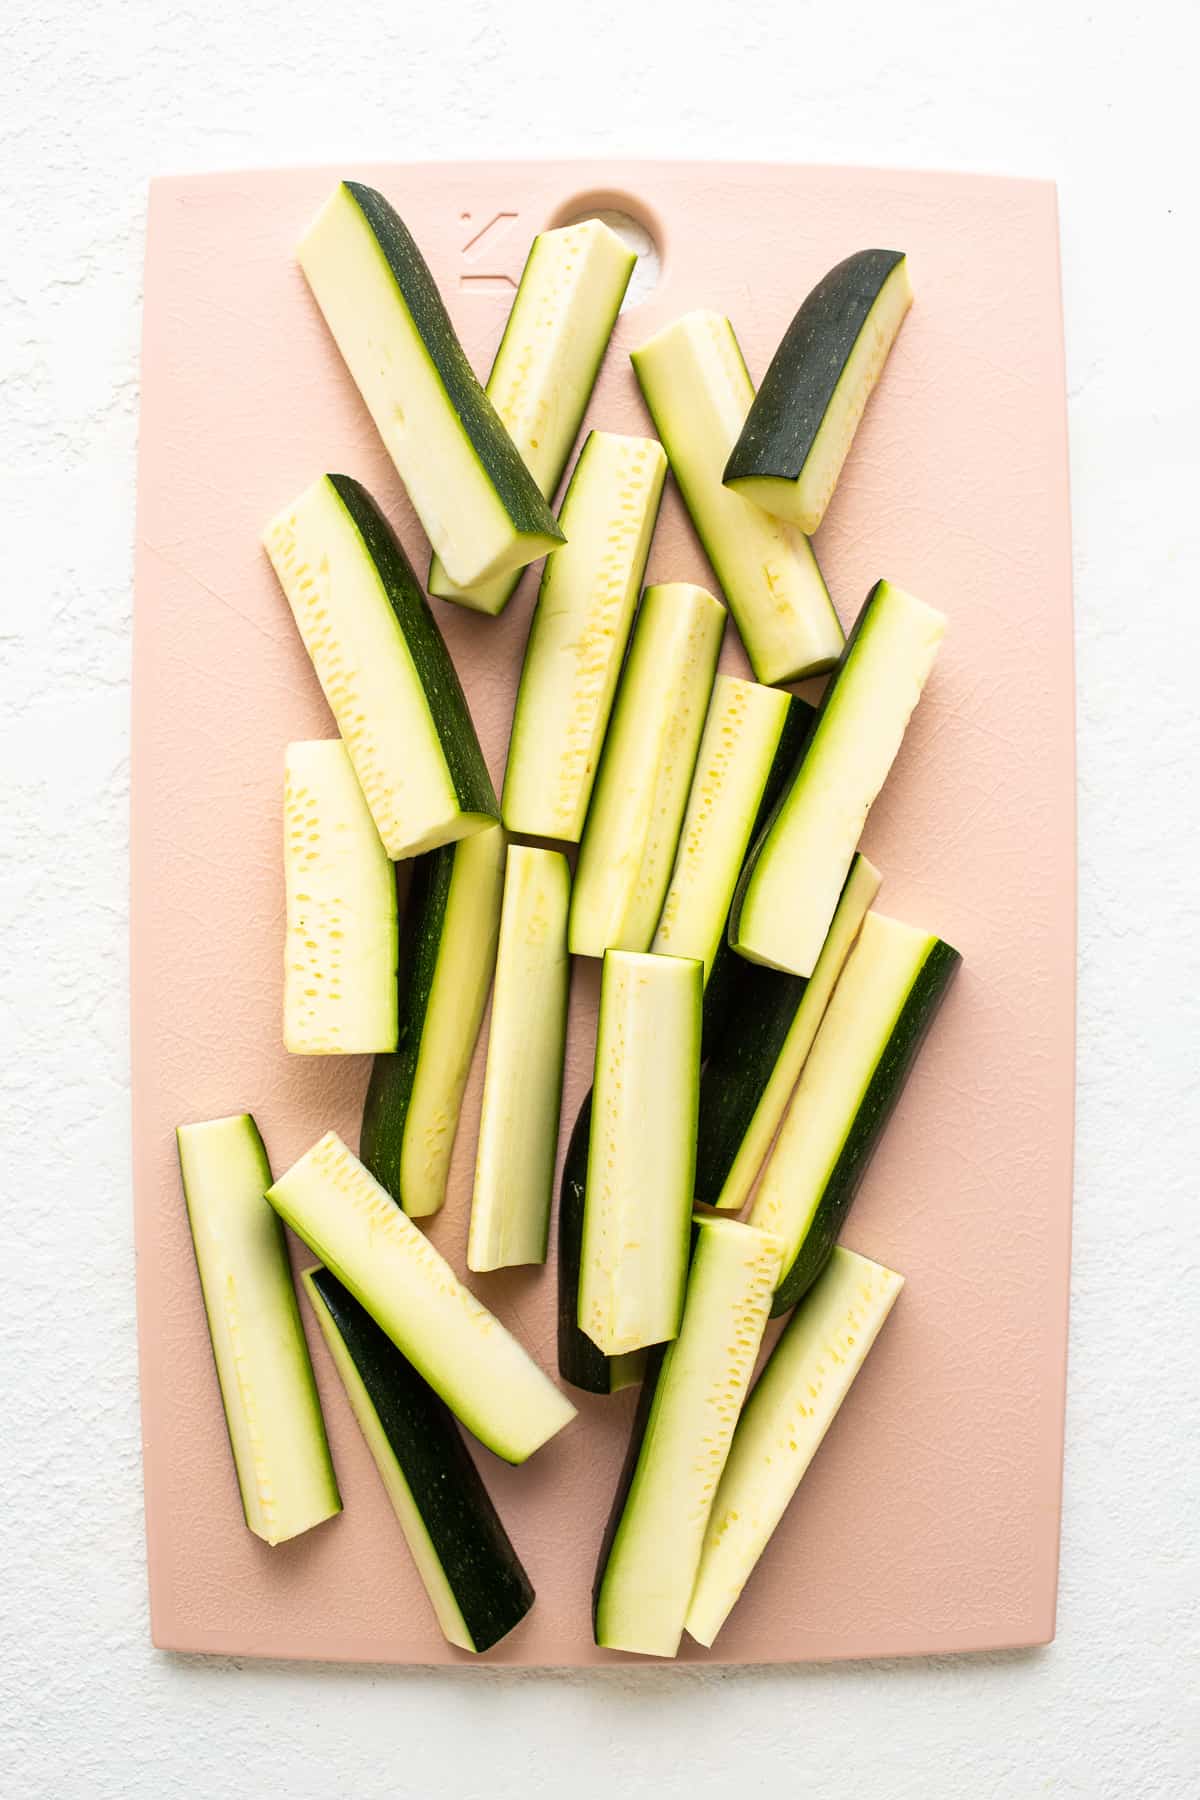 zucchini spears on cutting board.